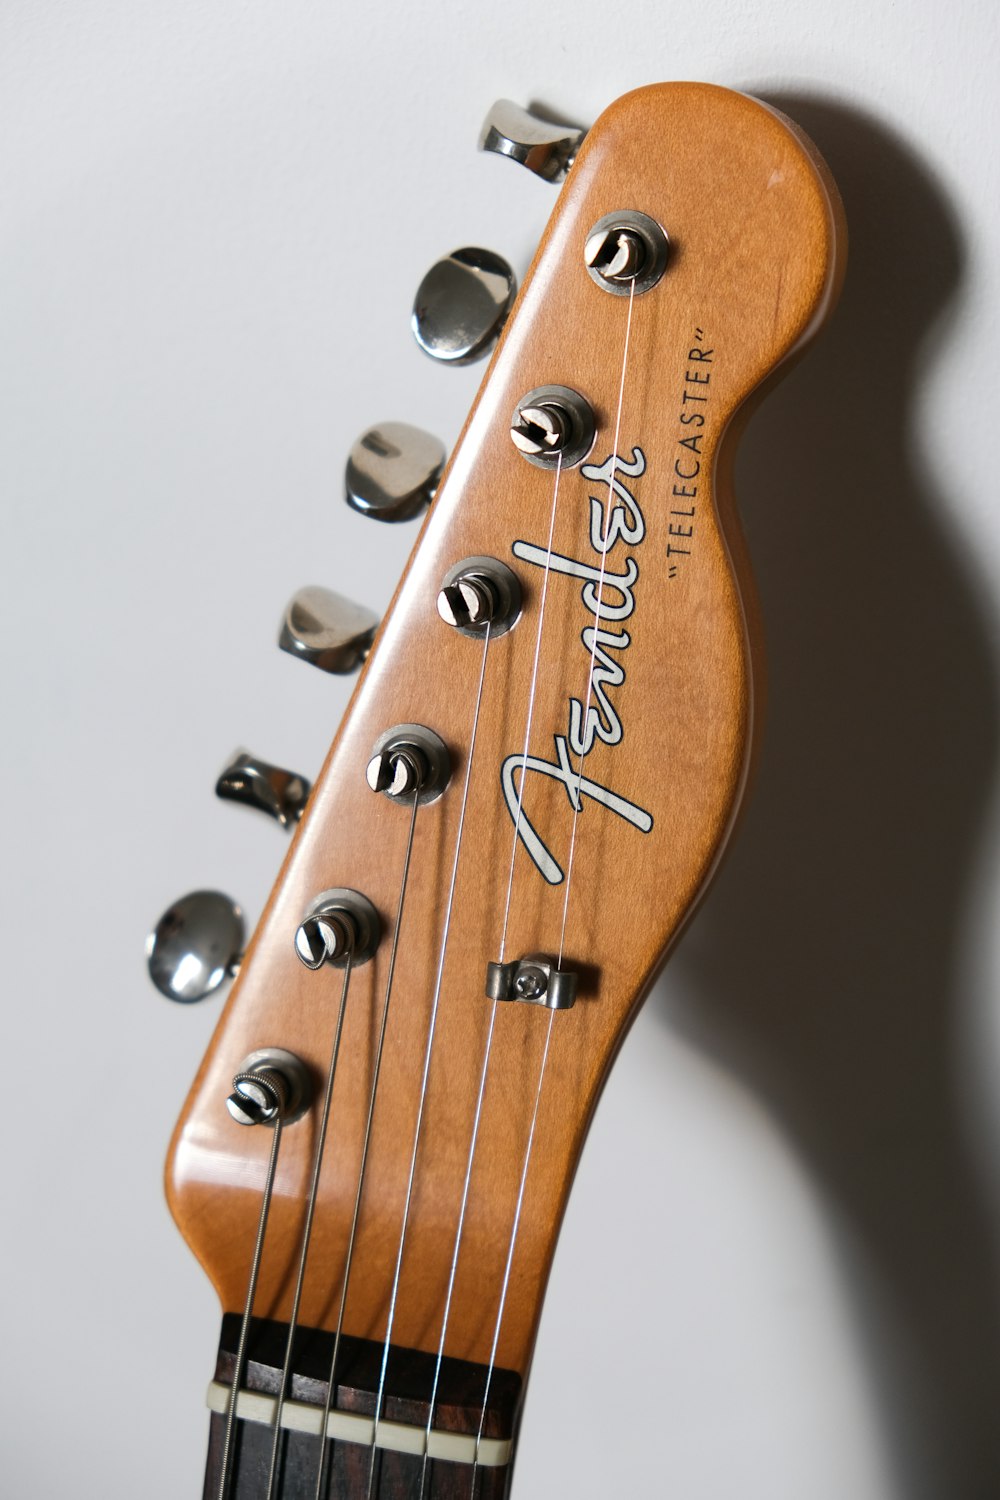 brown Fender guitar headstock on white surface